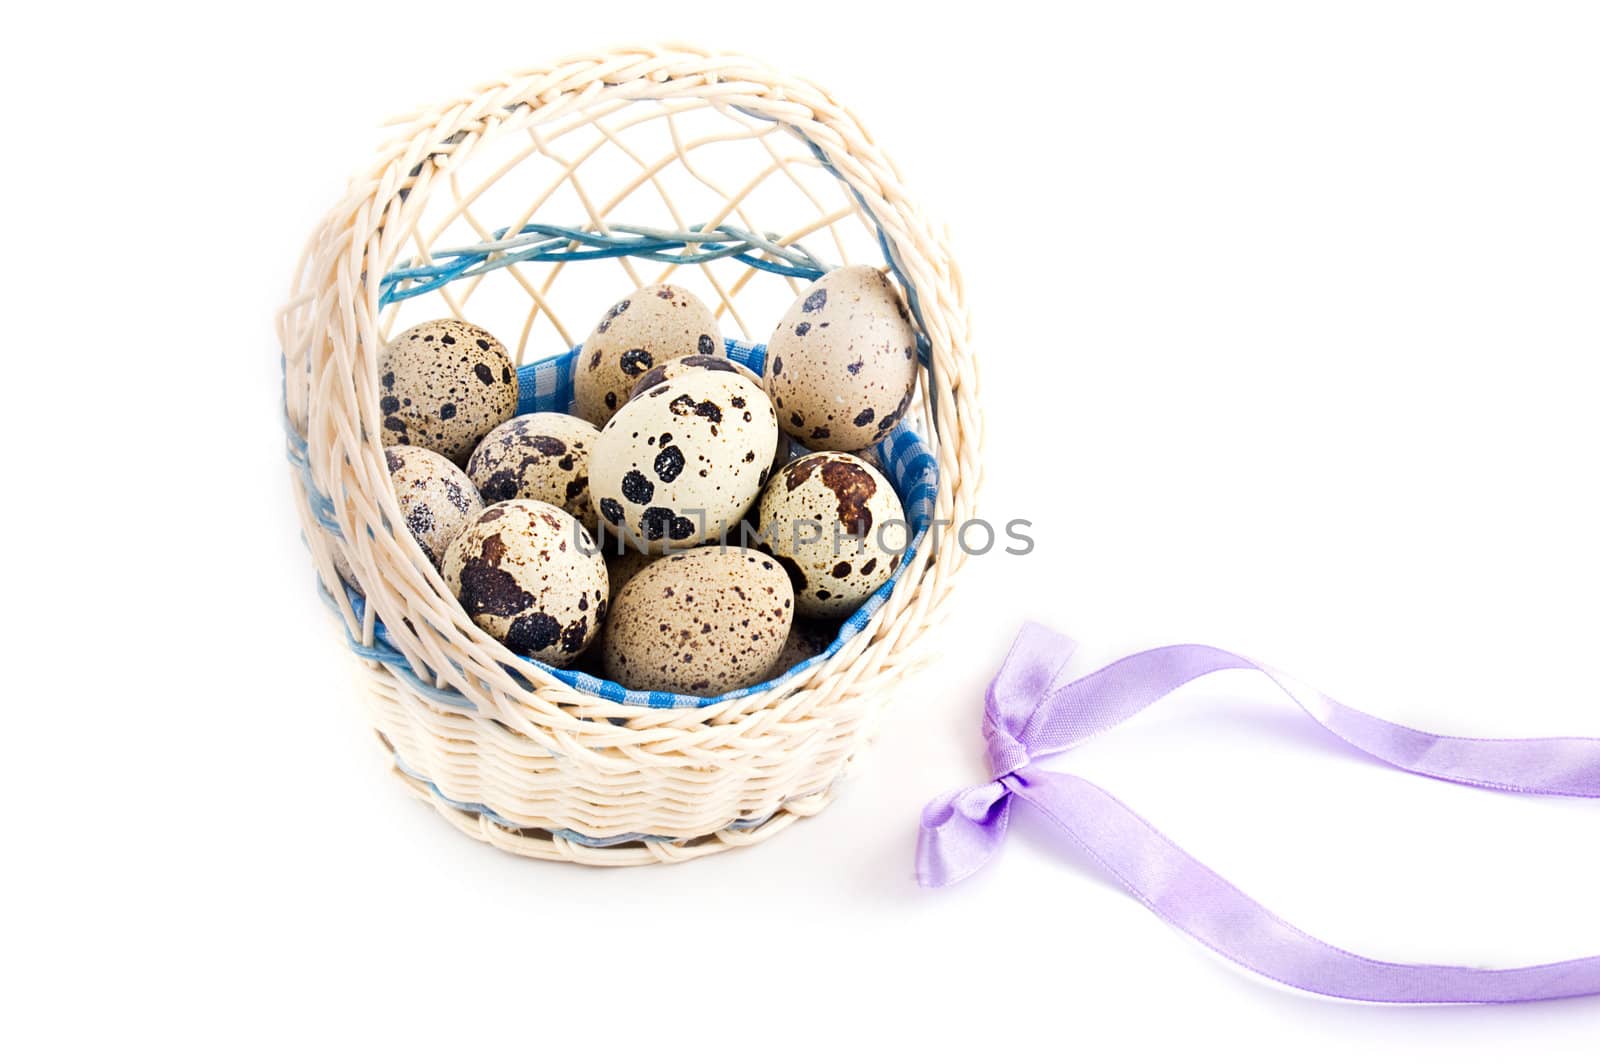 Quail eggs in basket by Angel_a